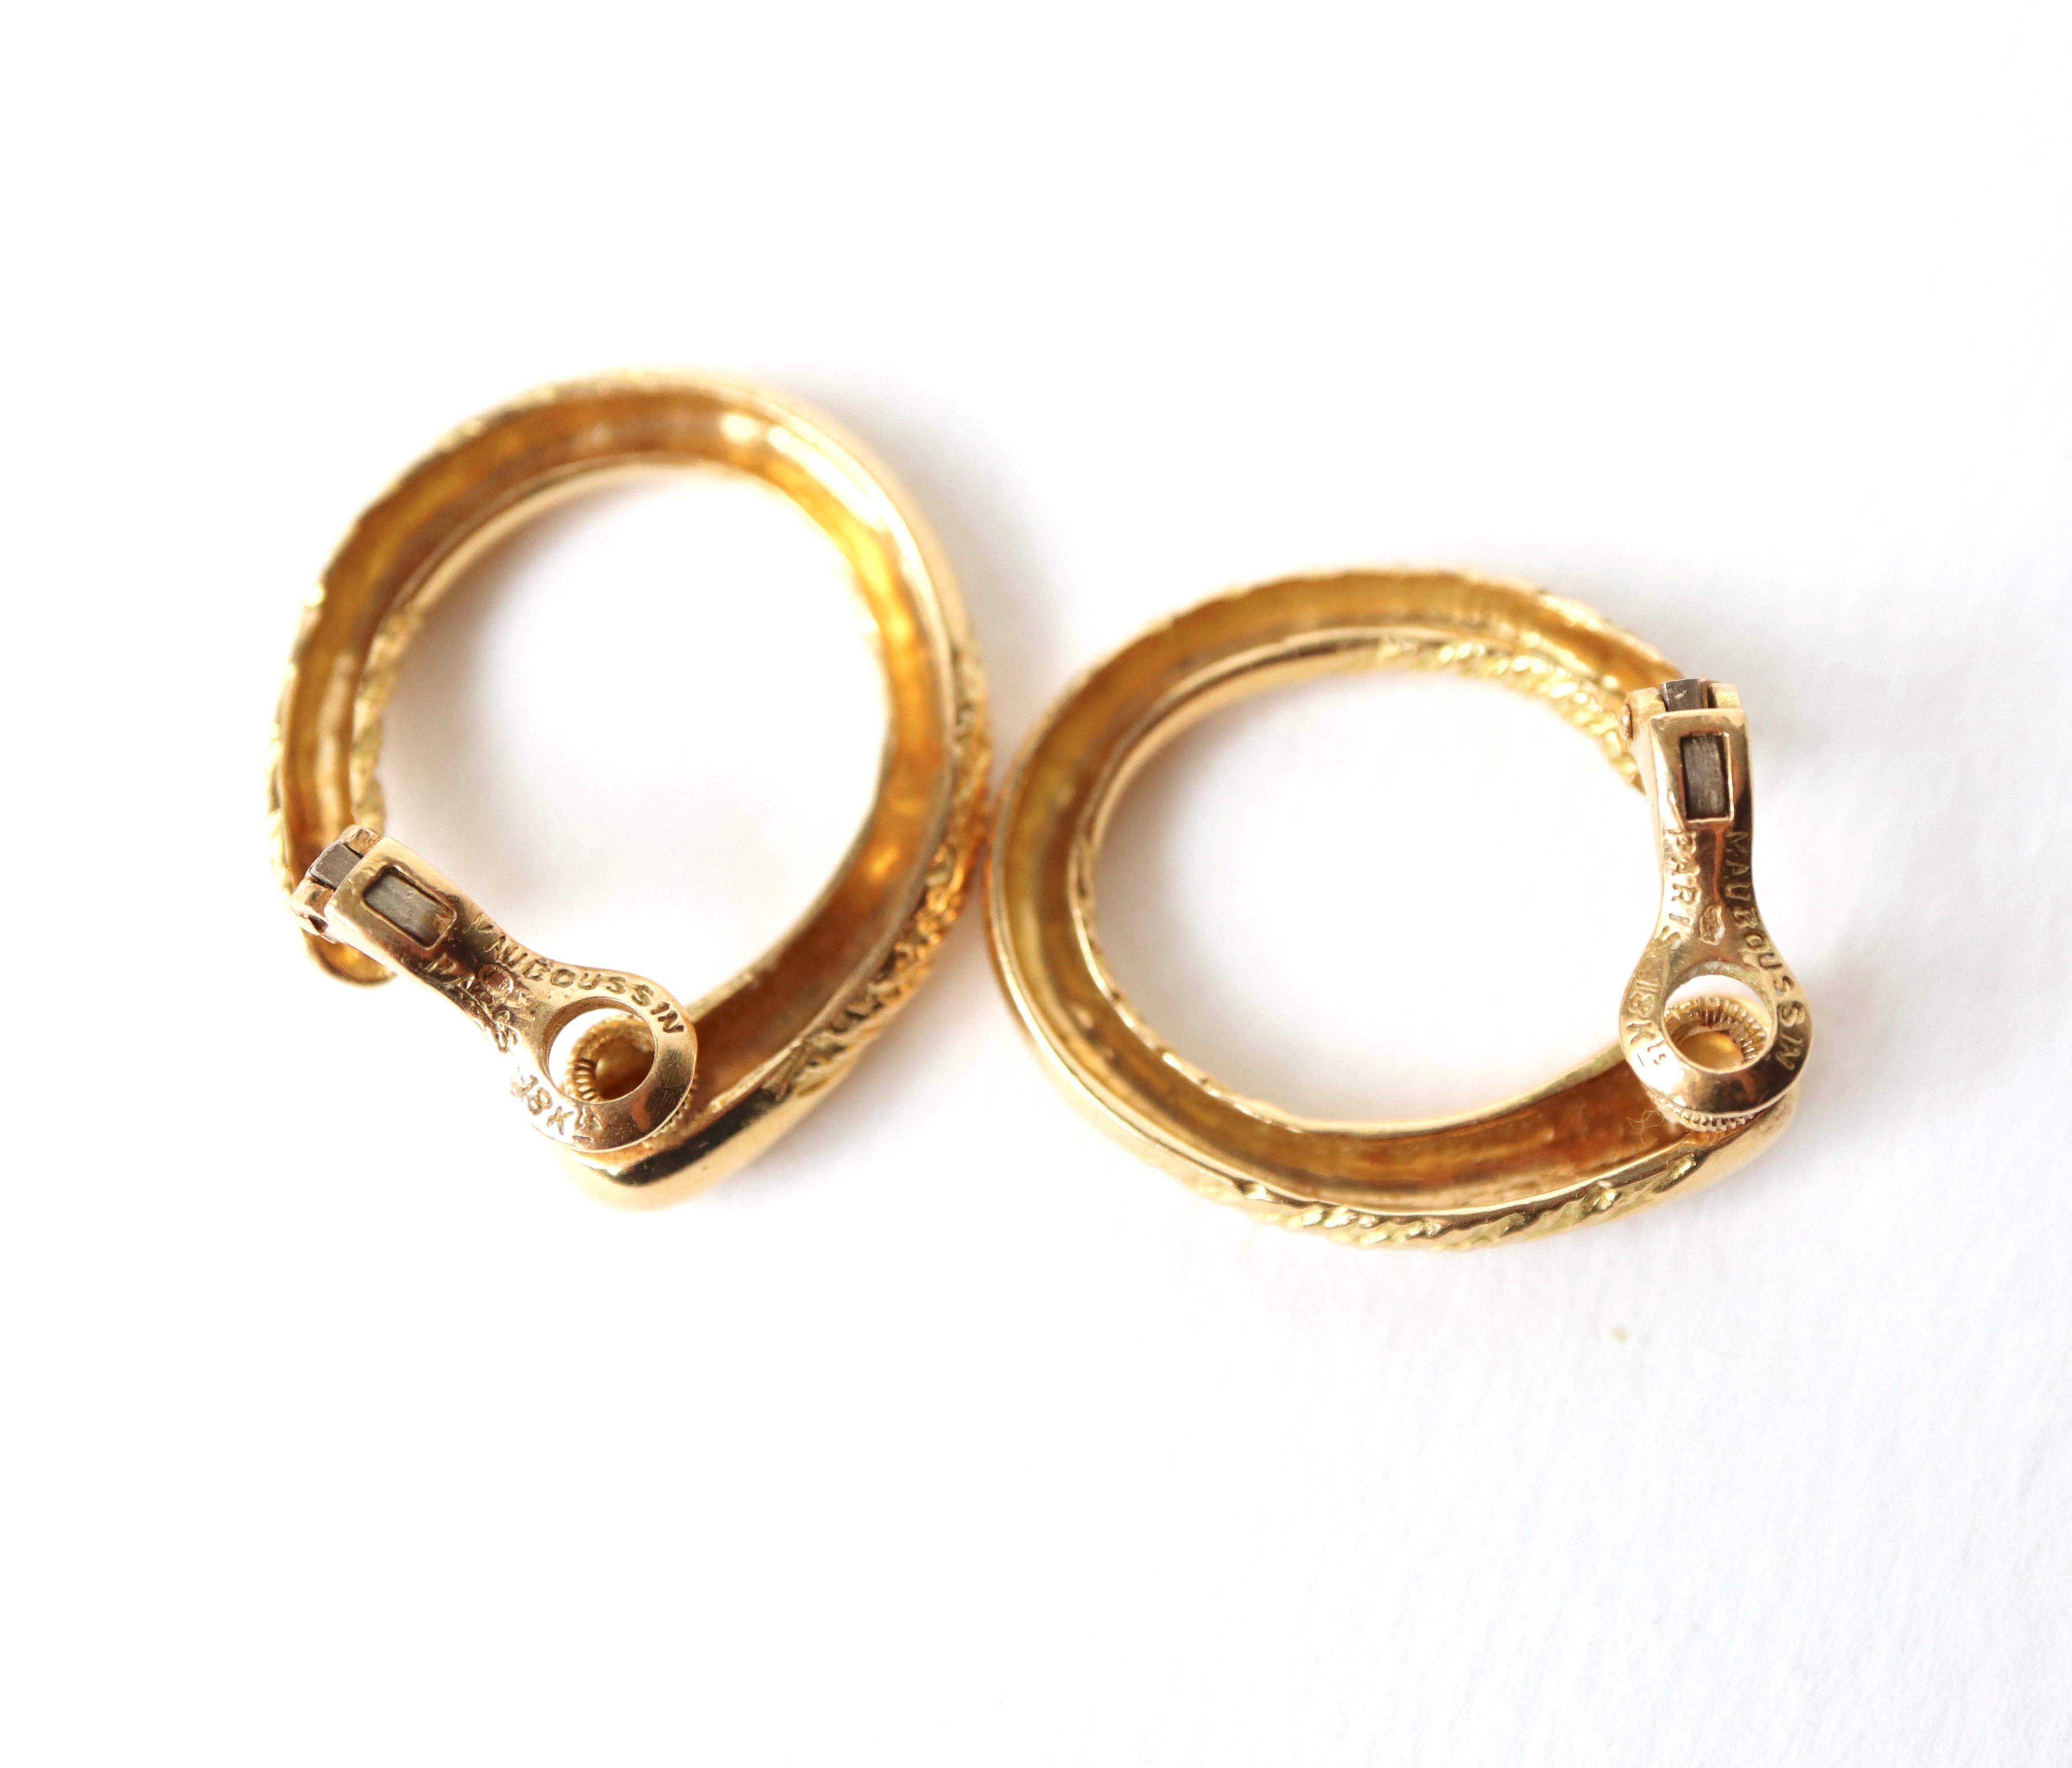 Mauboussin Earrings in 18 Carat Yellow Gold 3